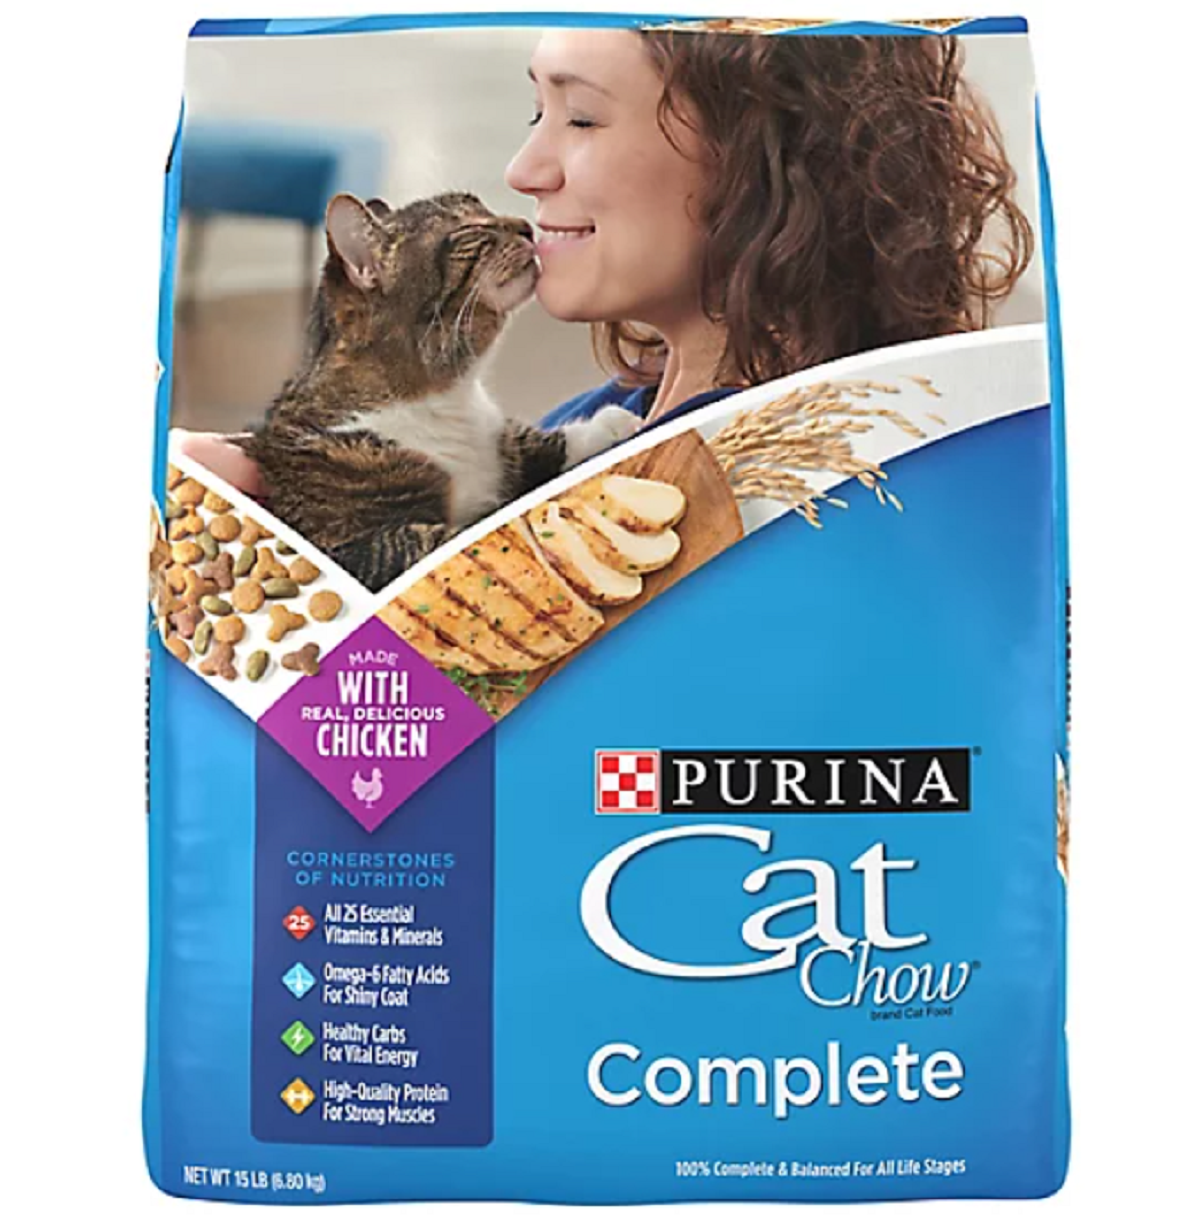 free printable coupons, Purnima Cat Chow, free cat food printable coupons